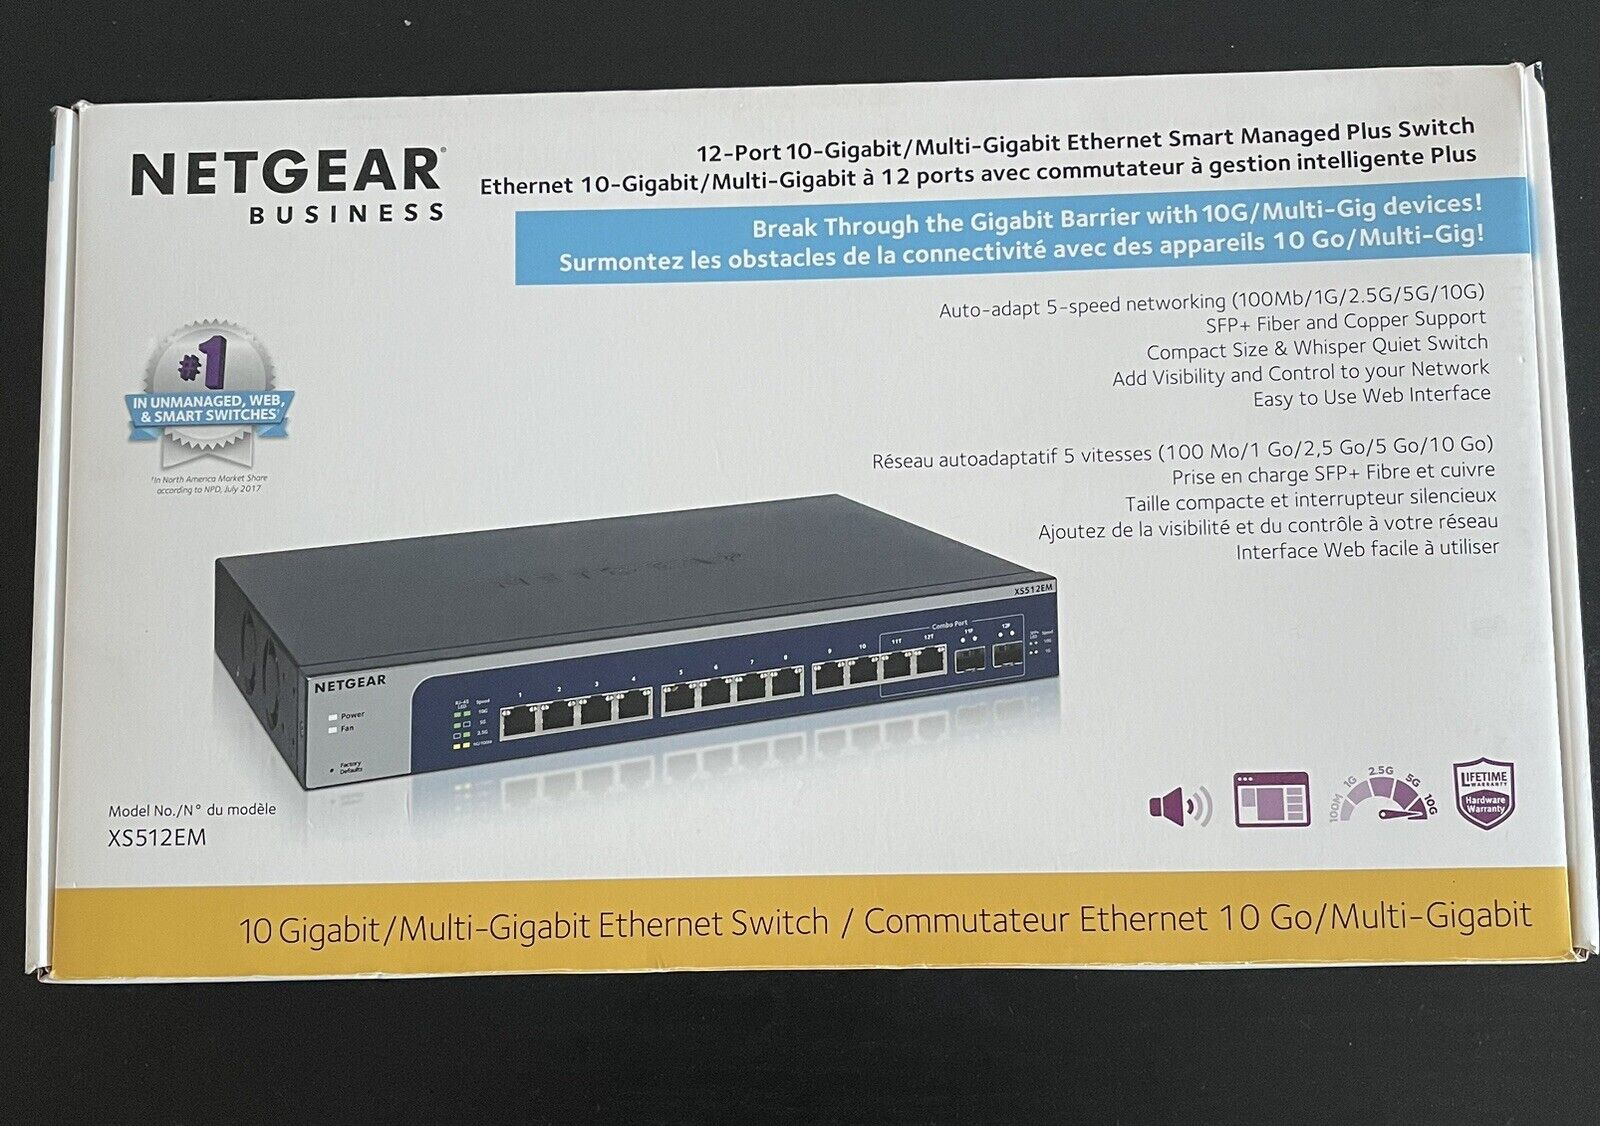 Netgear XS512EM 12-Port 10-Gigabit/Multi-Gigabit Ethernet Smart Managed + Switch